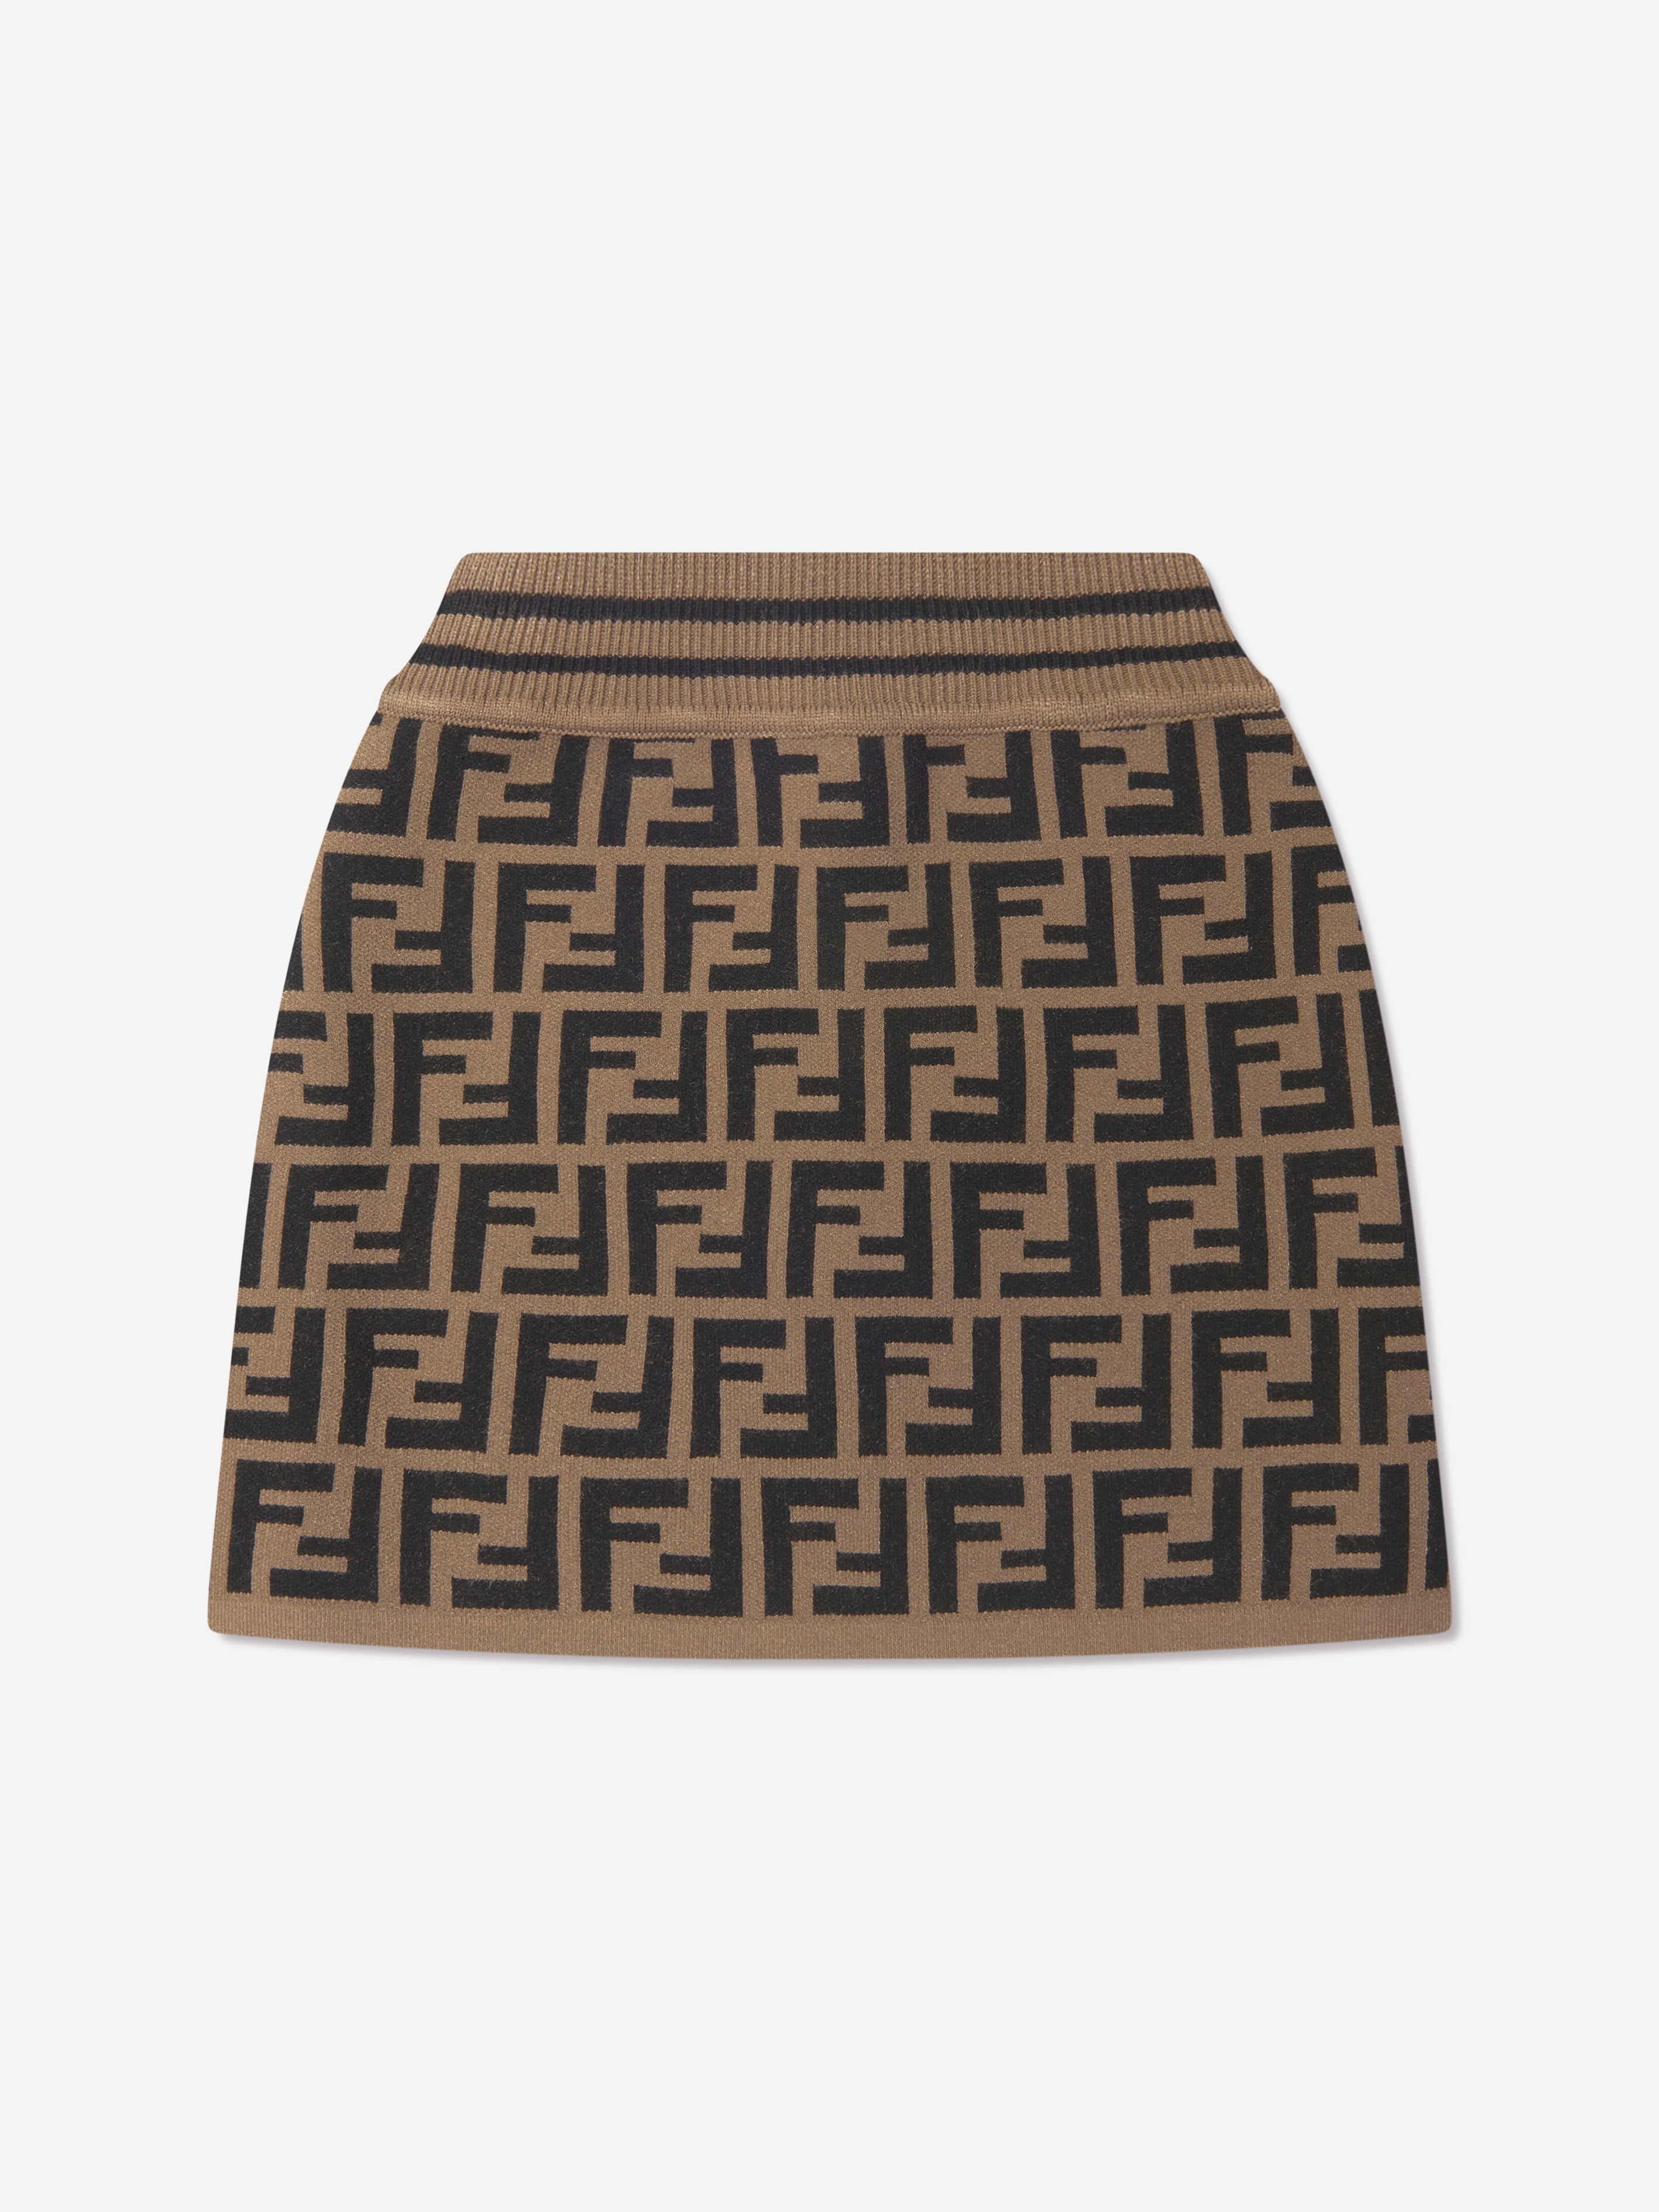 Fendi FF motif knitted pencil skirt